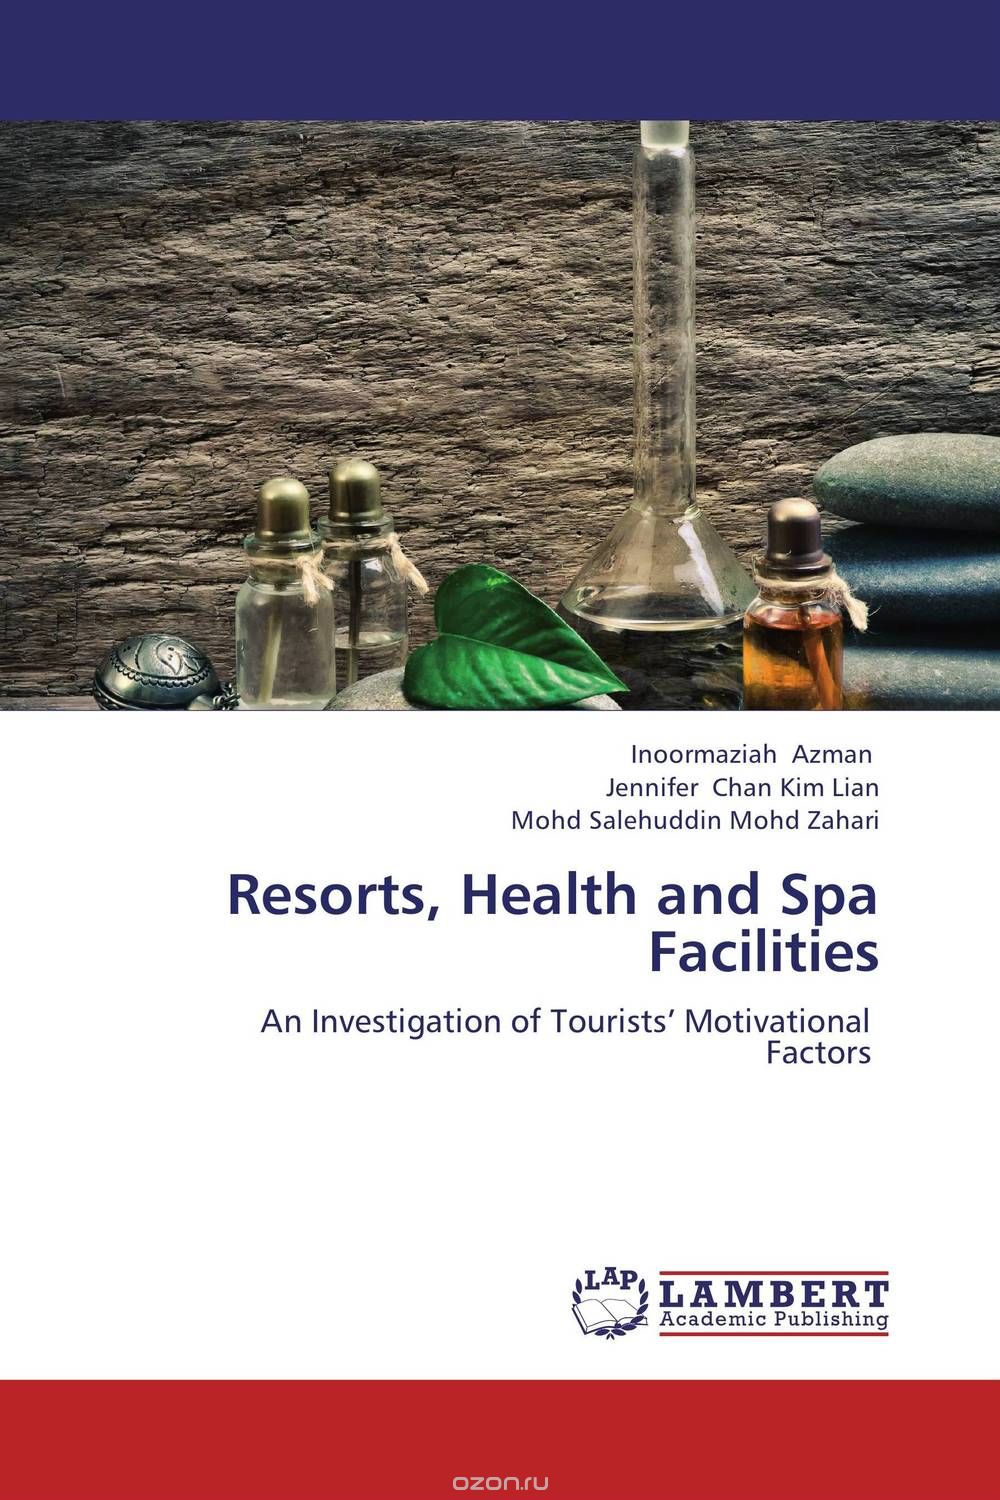 Скачать книгу "Resorts, Health and Spa Facilities"